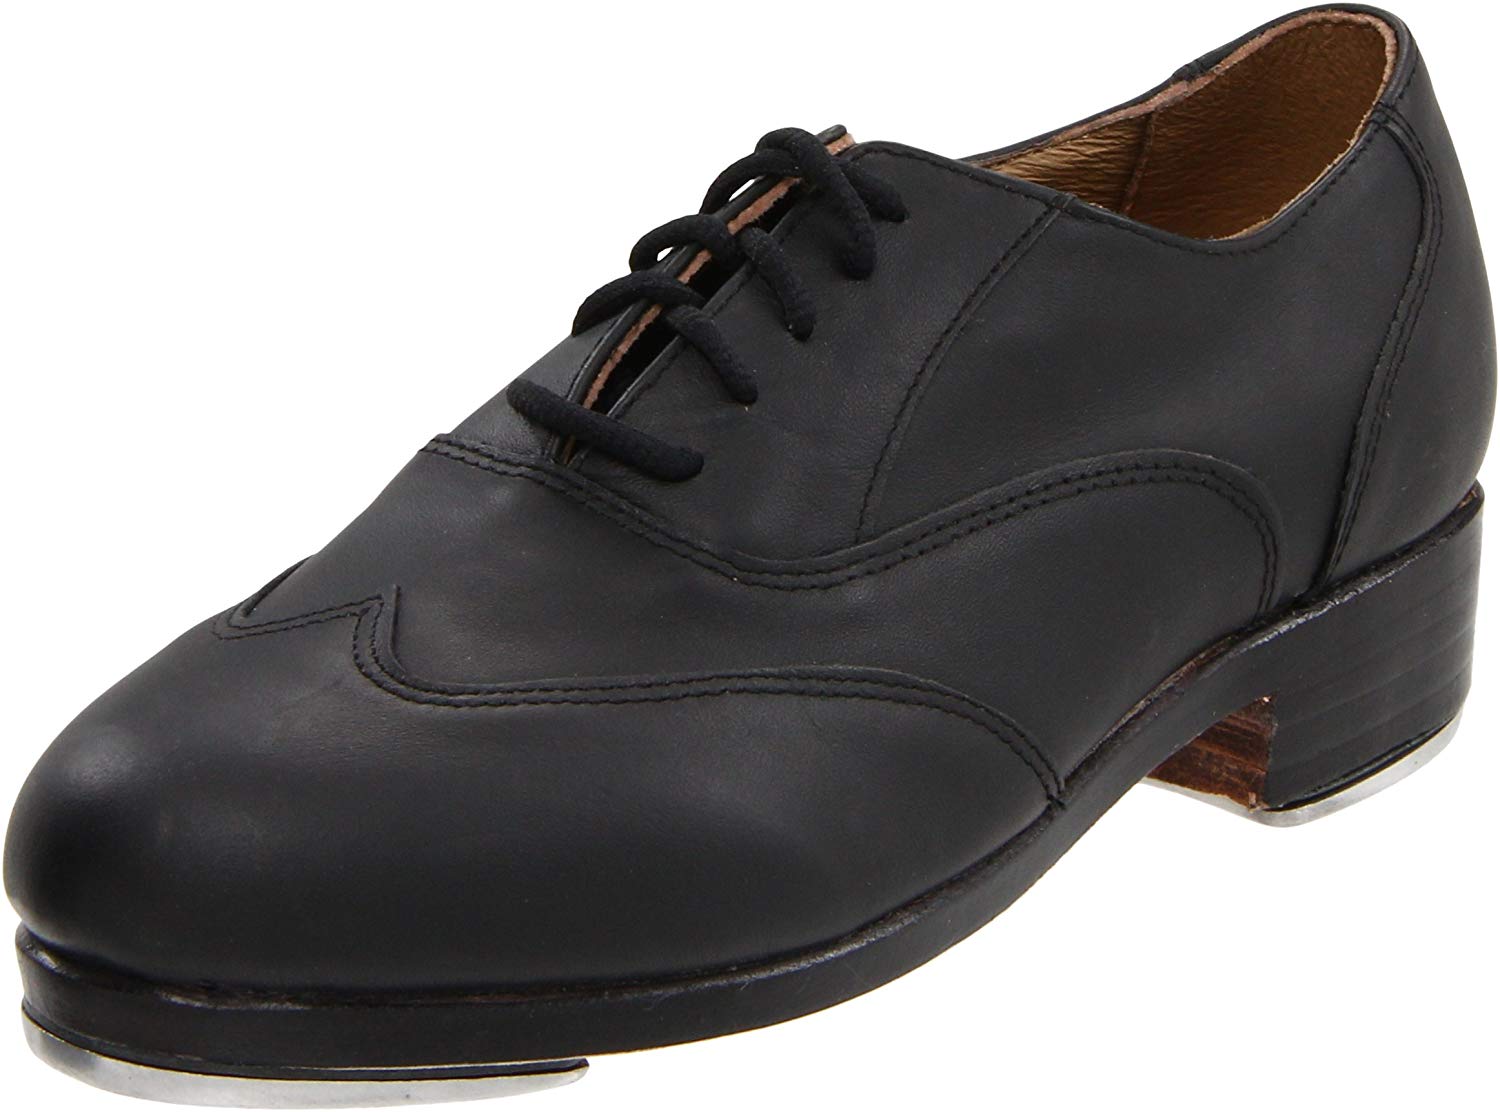 Sansha Men's TBojango Tap Shoe, Black, Size 10.0 c4Fy eBay